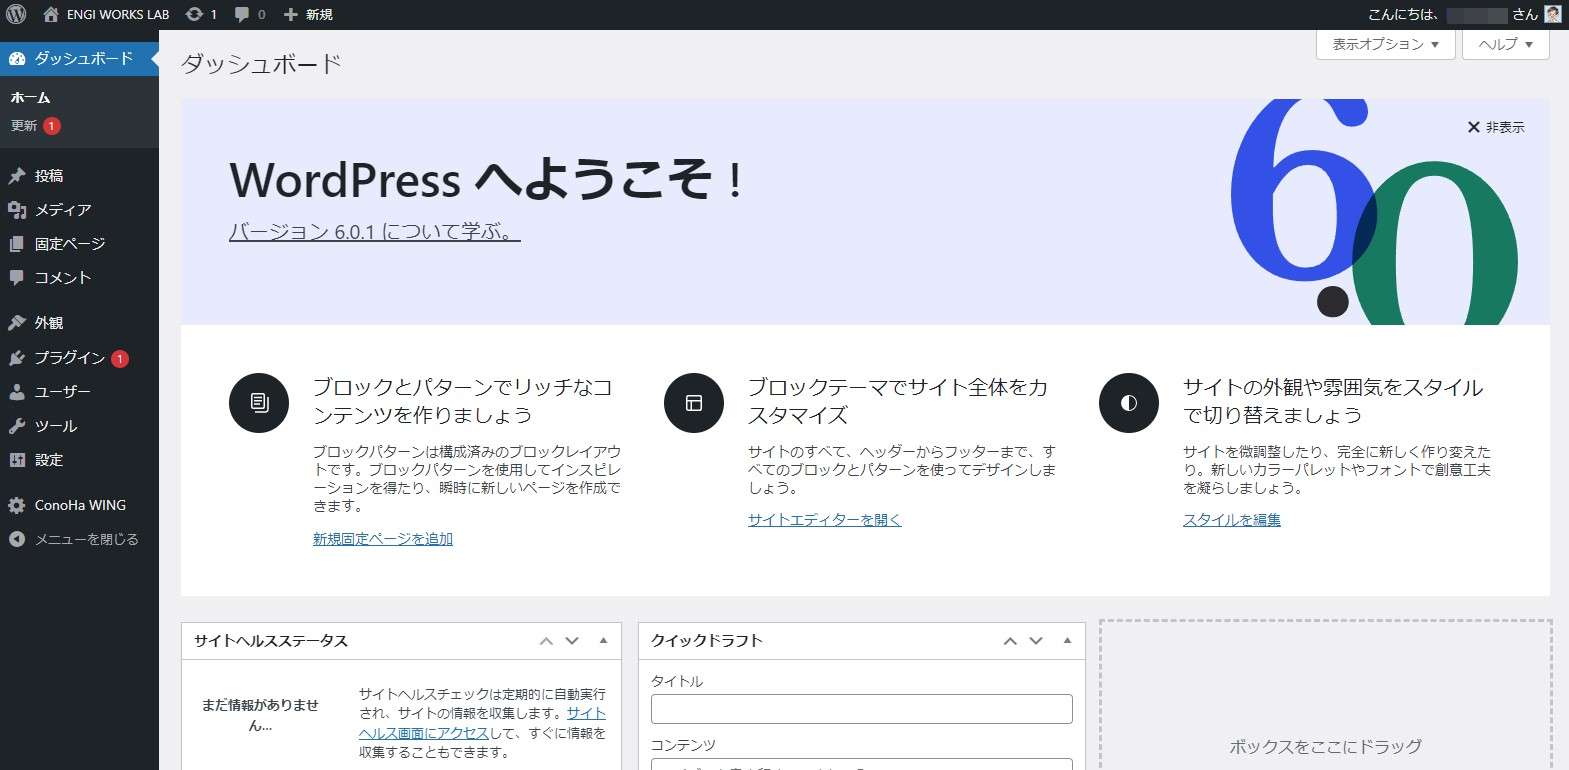 ConoHa WINGの使ったWordPressの管理画面